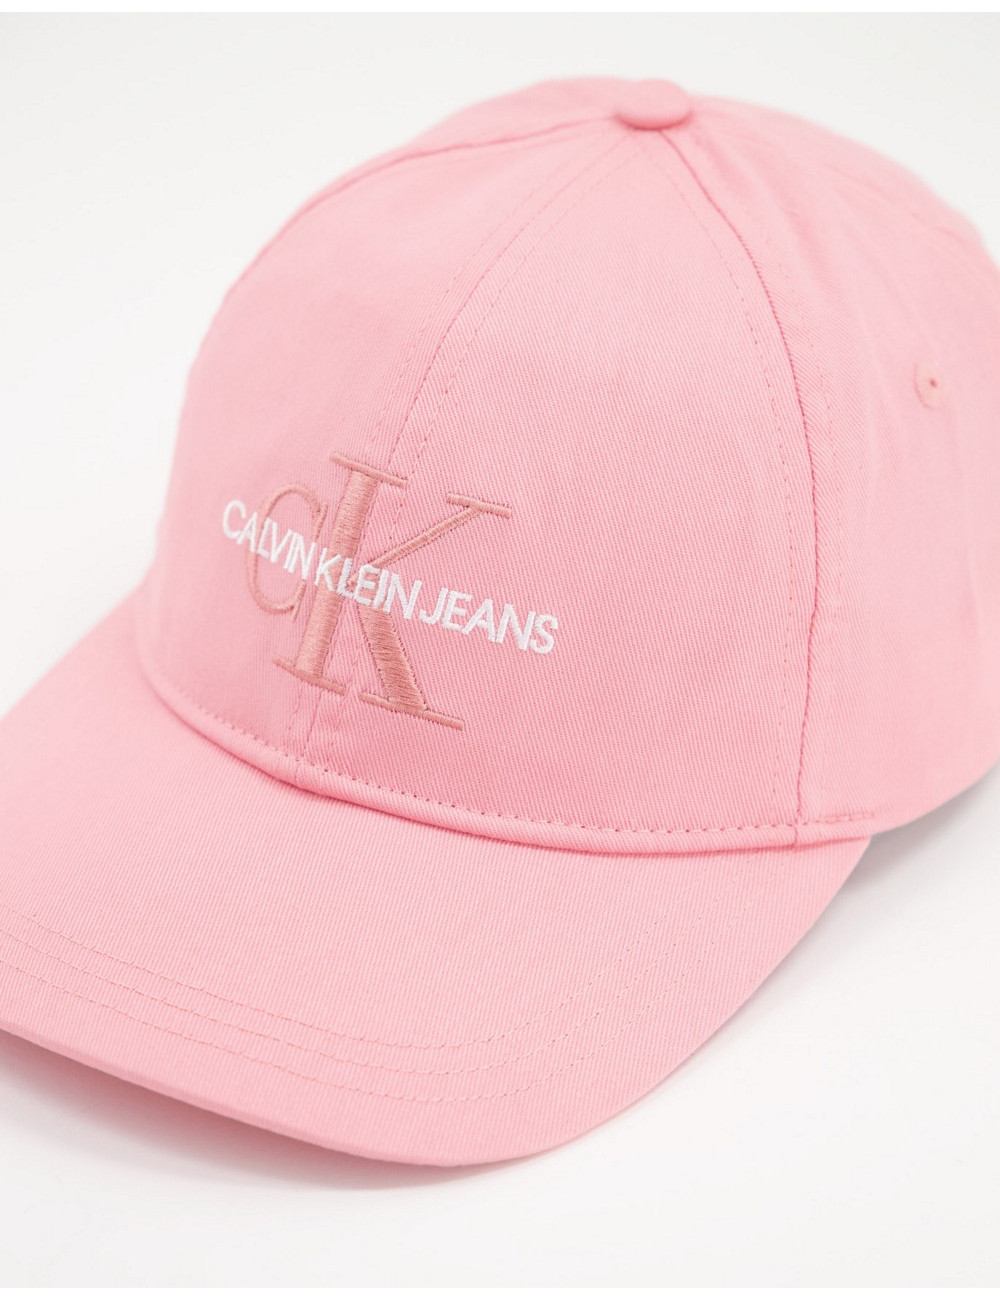 Calvin Klein Jeans CK cap...